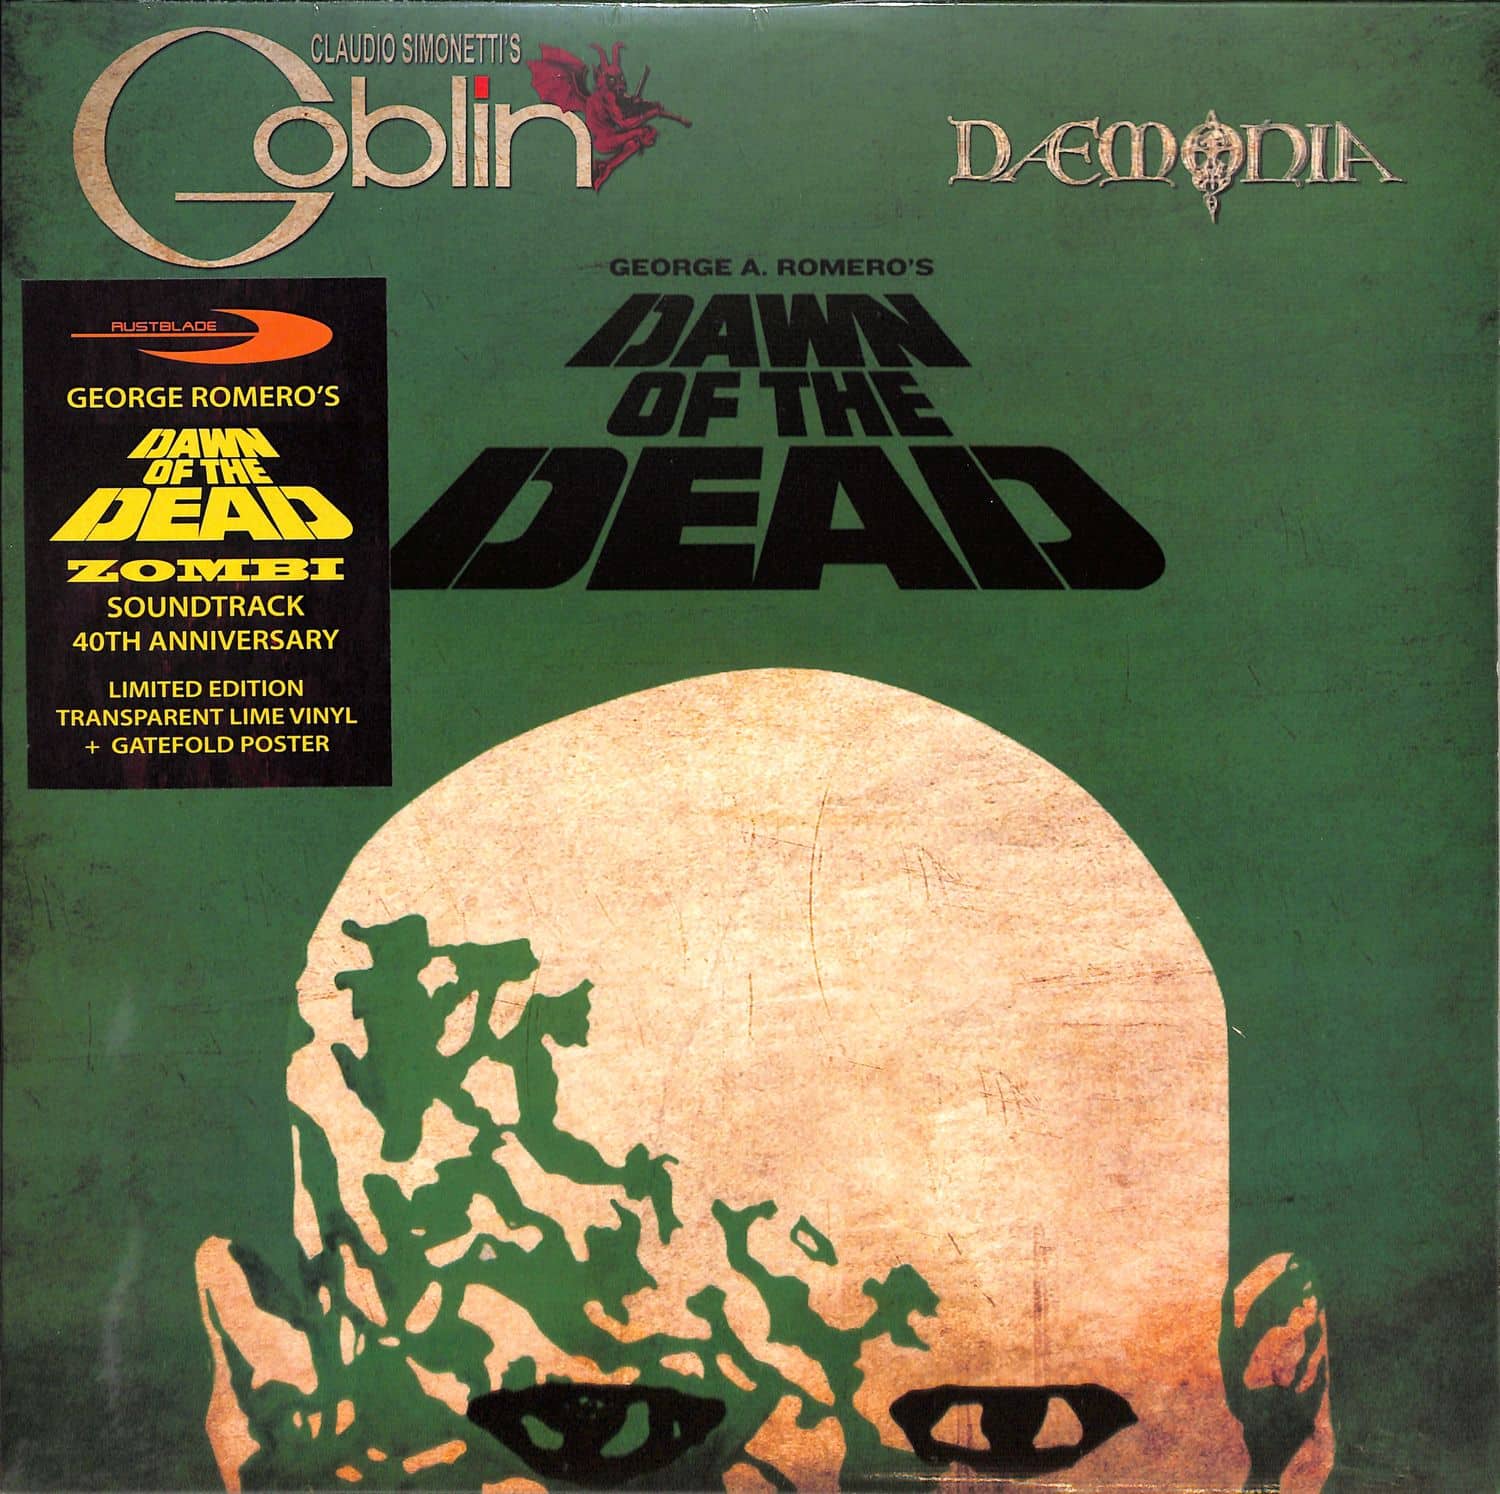 Claudio Simonettis Goblin - DAWN OF THE DEAD OST 